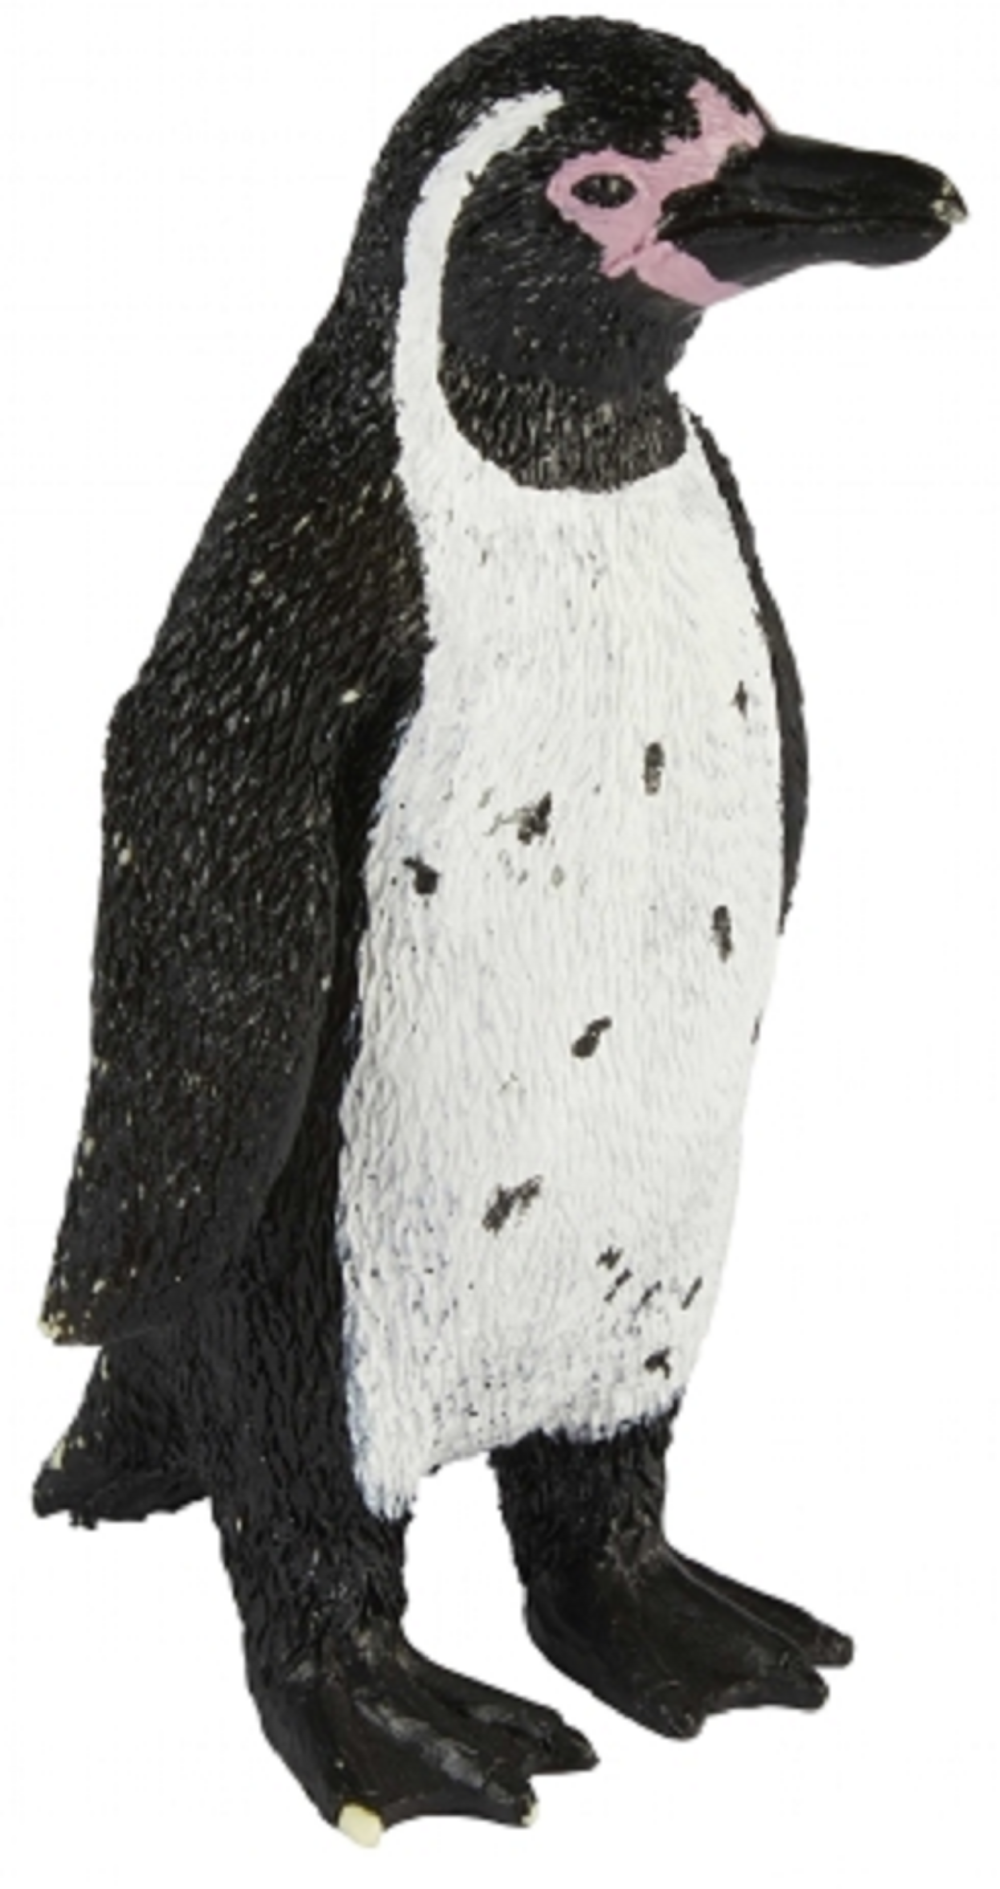 Ravensden Stretchy Penguin 11cm